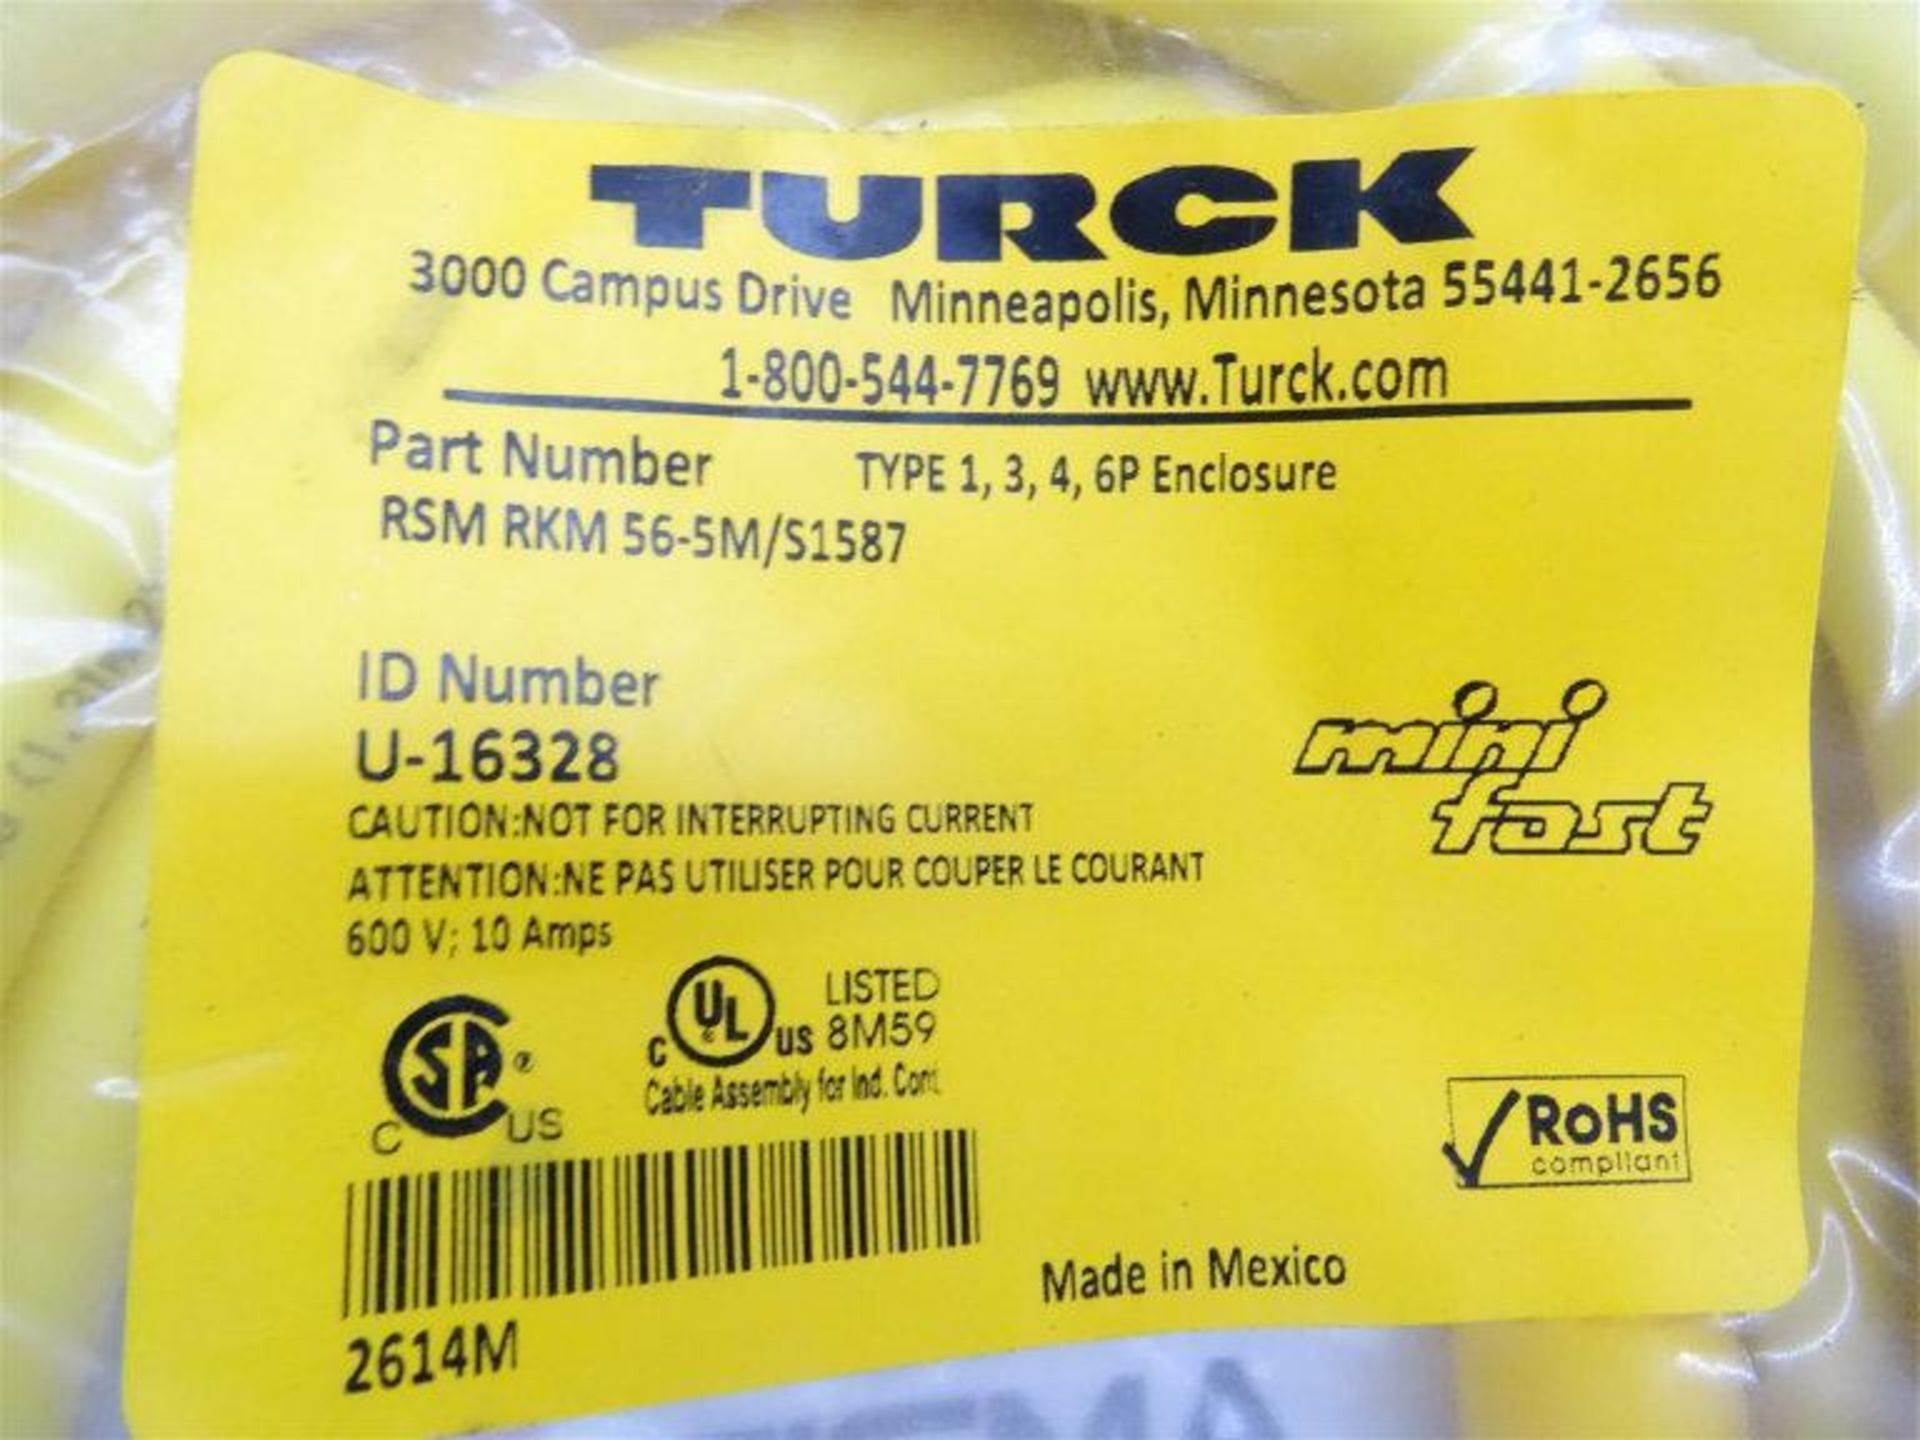 (5) TURCK RSM RKM 56-5M/S1587 Cable